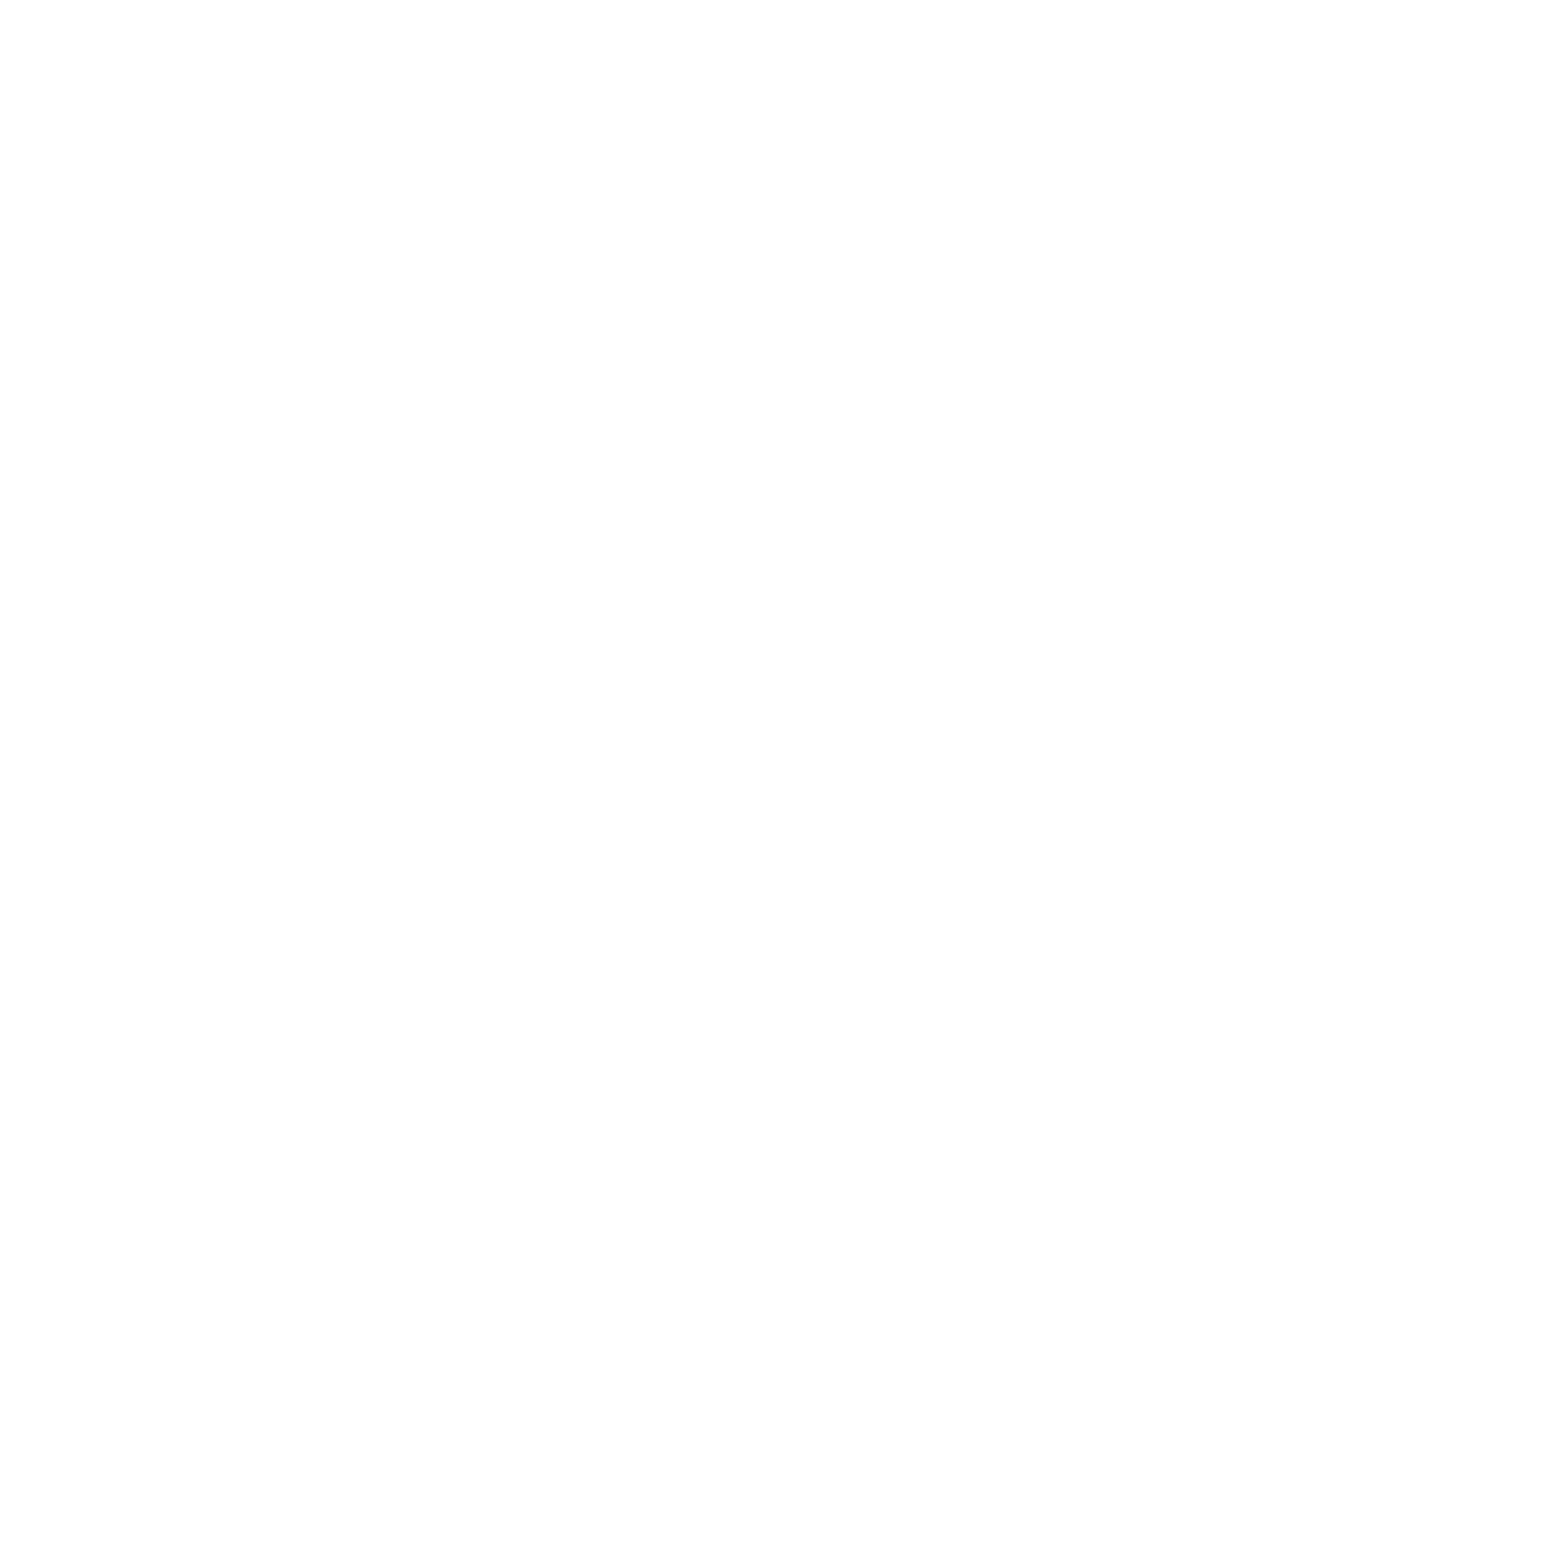 AVEVA logo for dark backgrounds (transparent PNG)